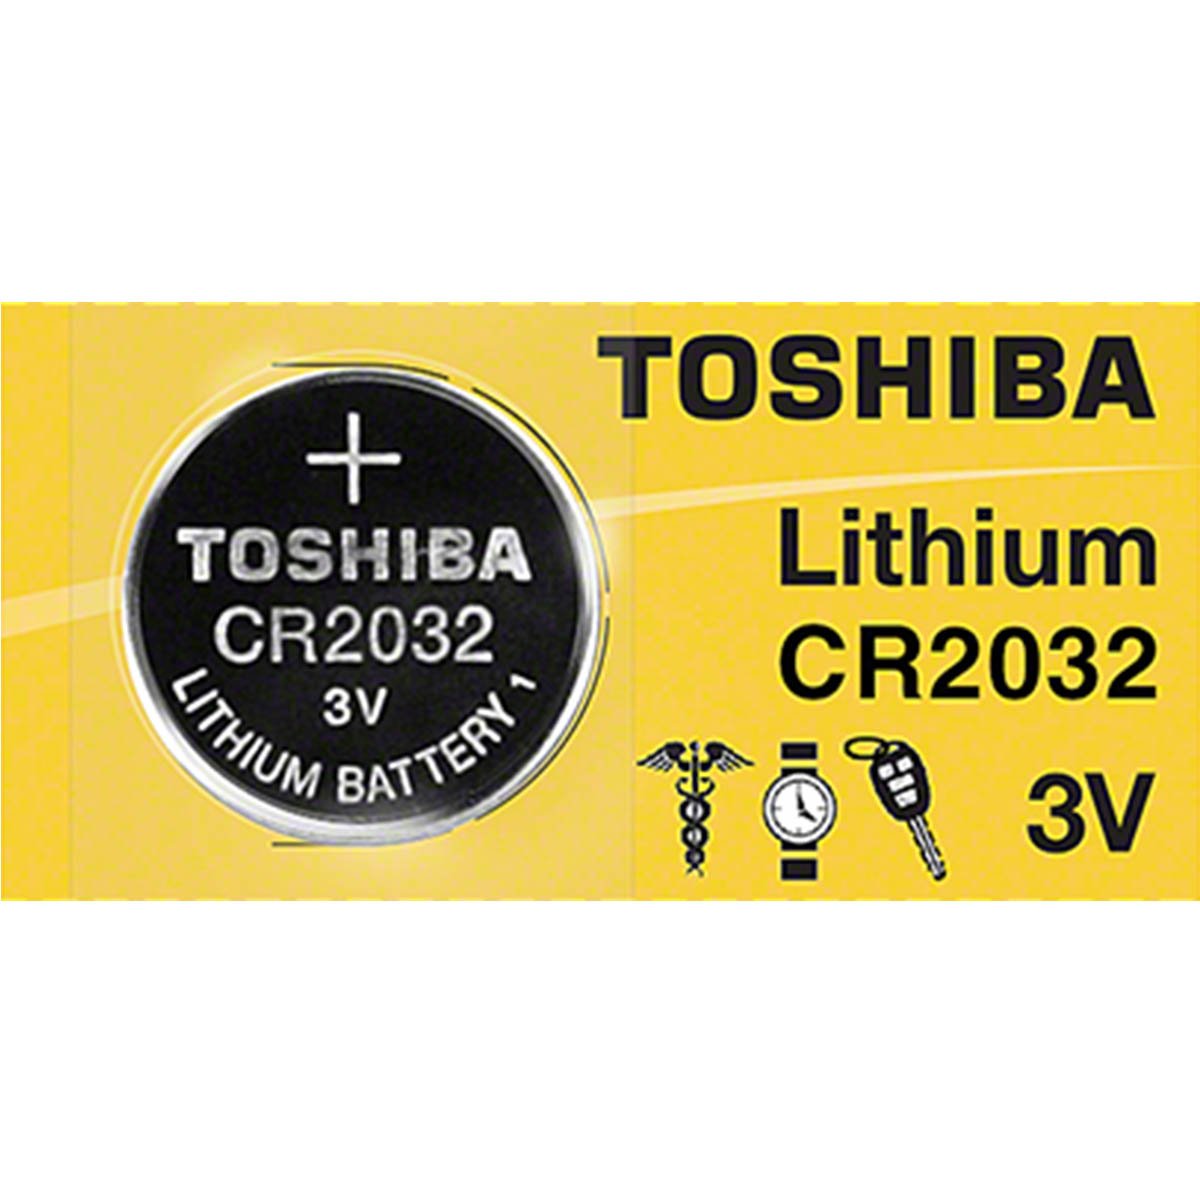 1 X Original Toshiba CR2025 CR 2025 3V LITHIUM BATTERY BR2025 Watch EXPR  2025